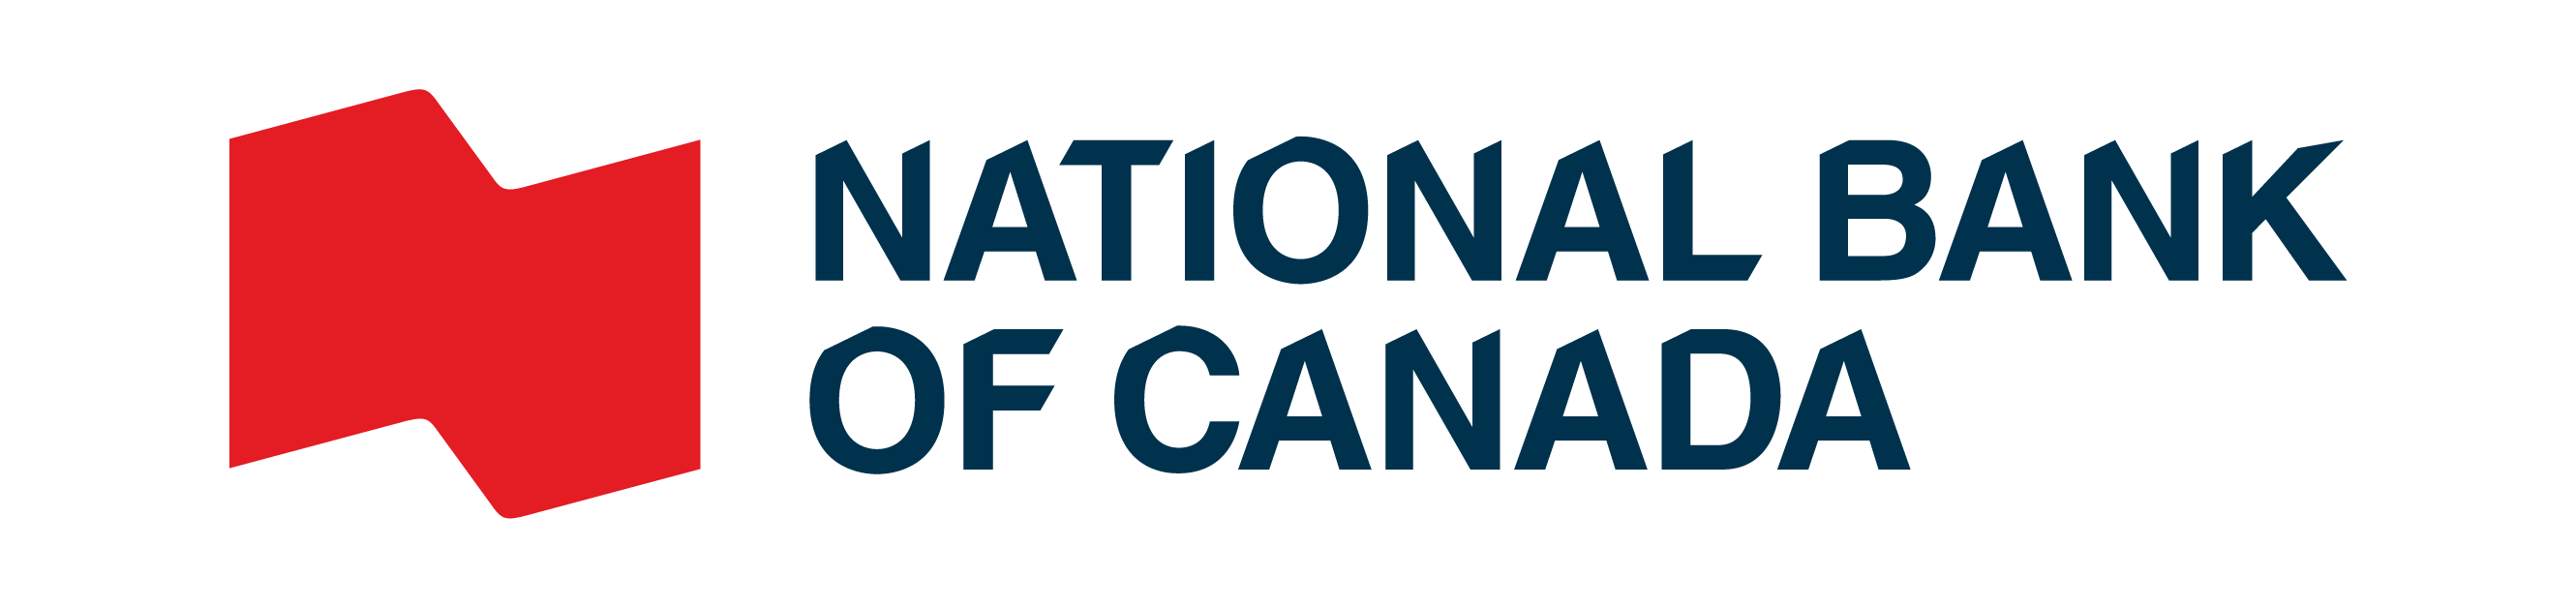 National Bank of Canada-logo